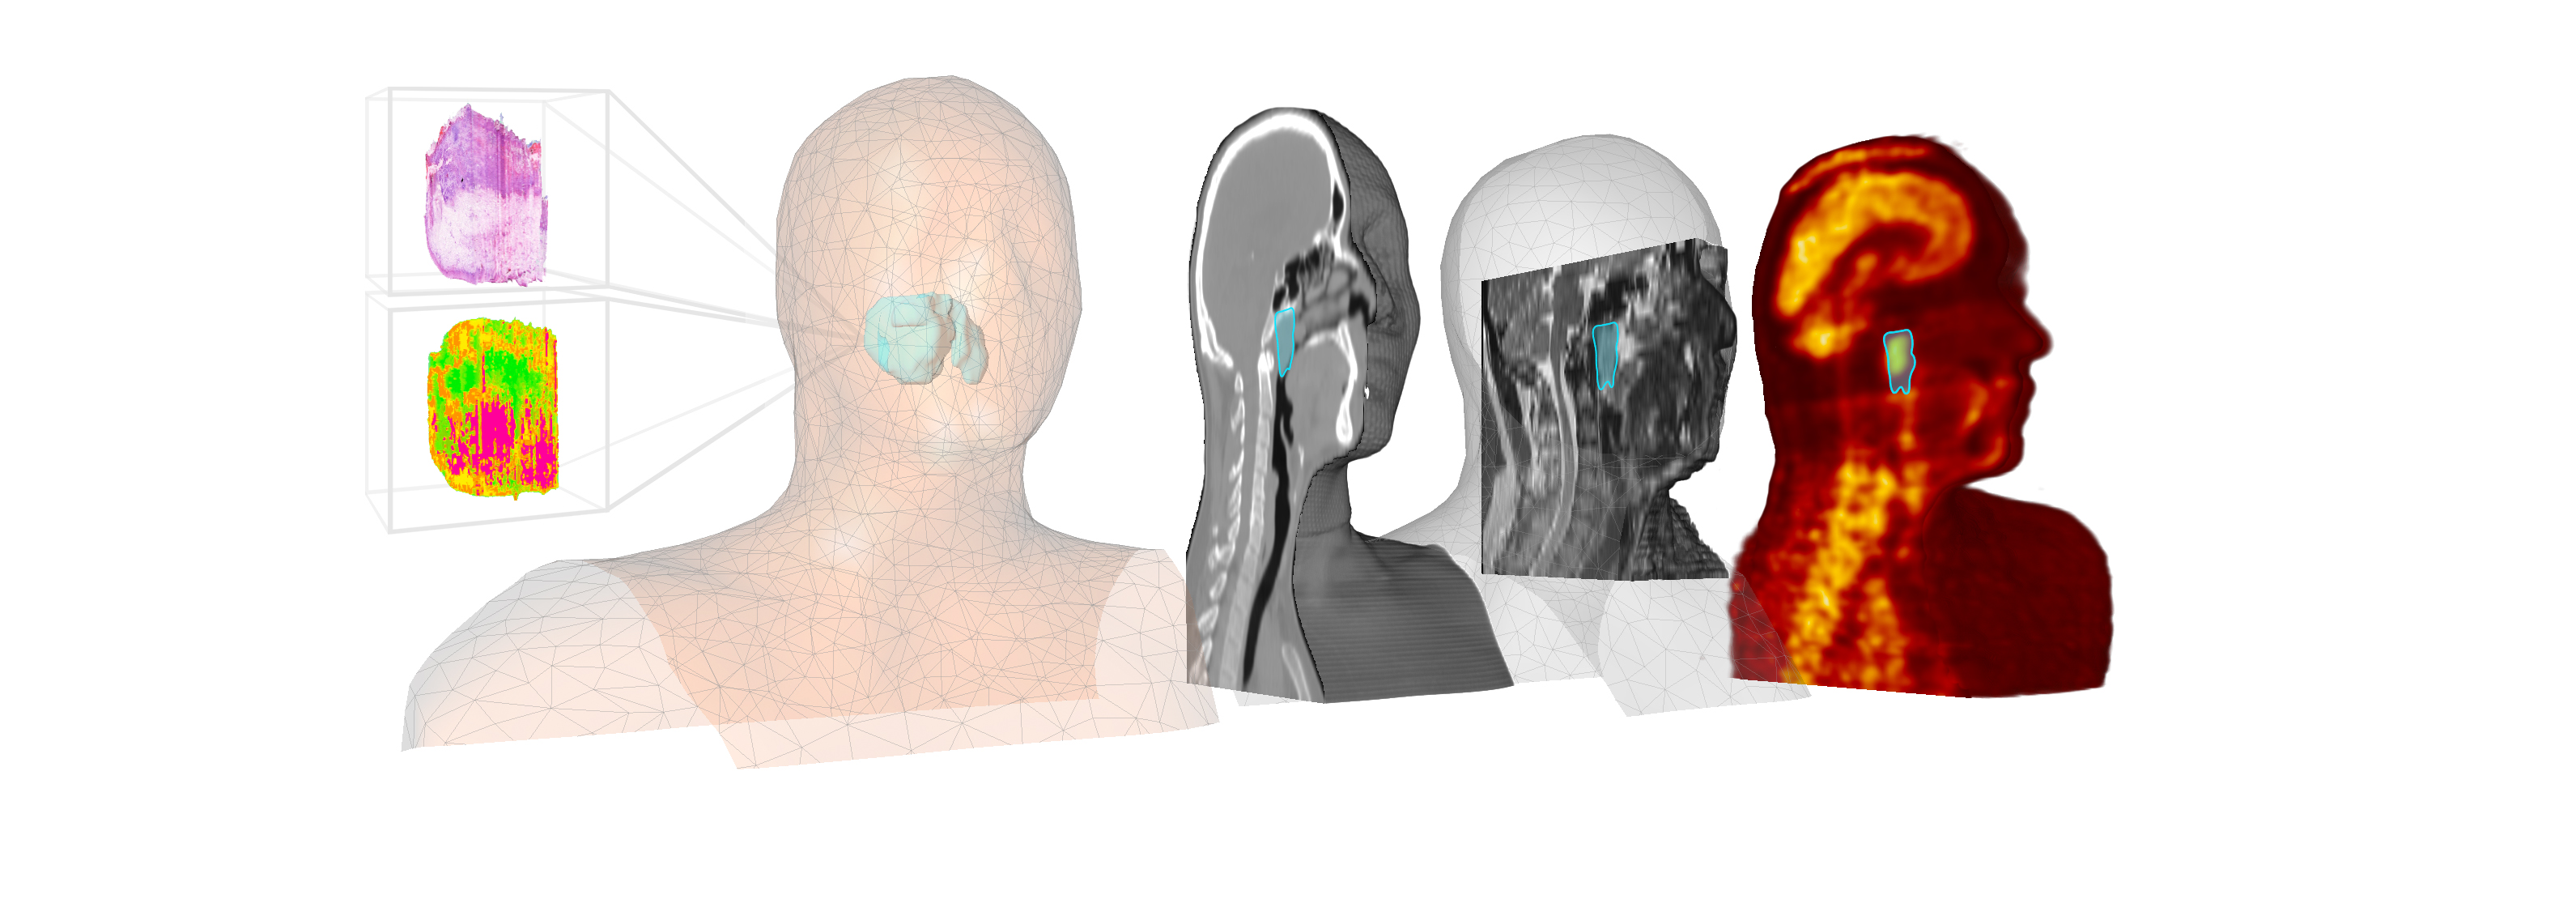 Multi-modal Registration brain neck carcinoma